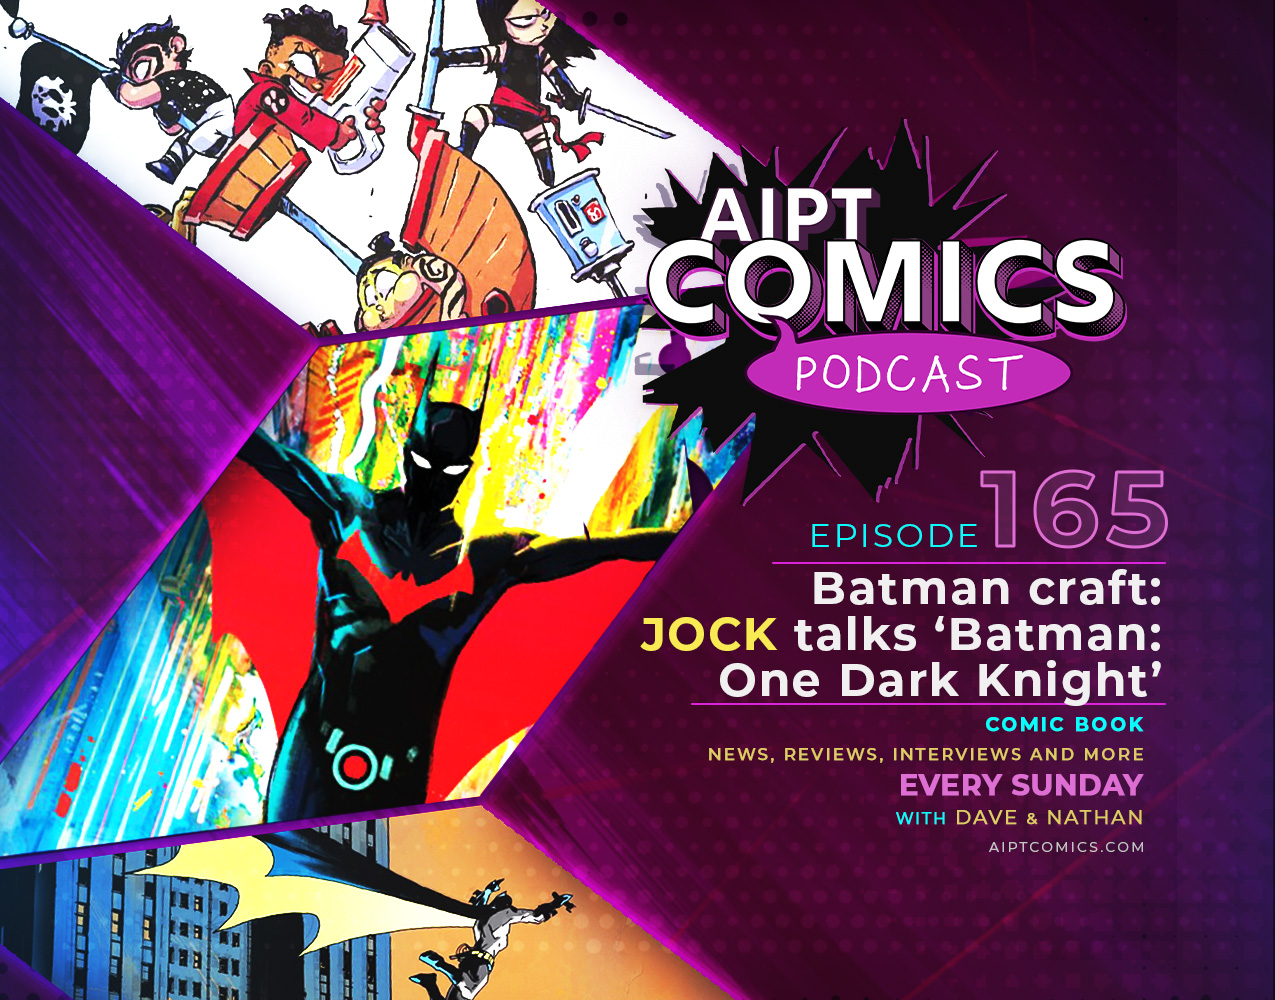 AIPT Comics podcast episode 165: Batman Craft: Jock talks 'Batman: One Dark Knight'